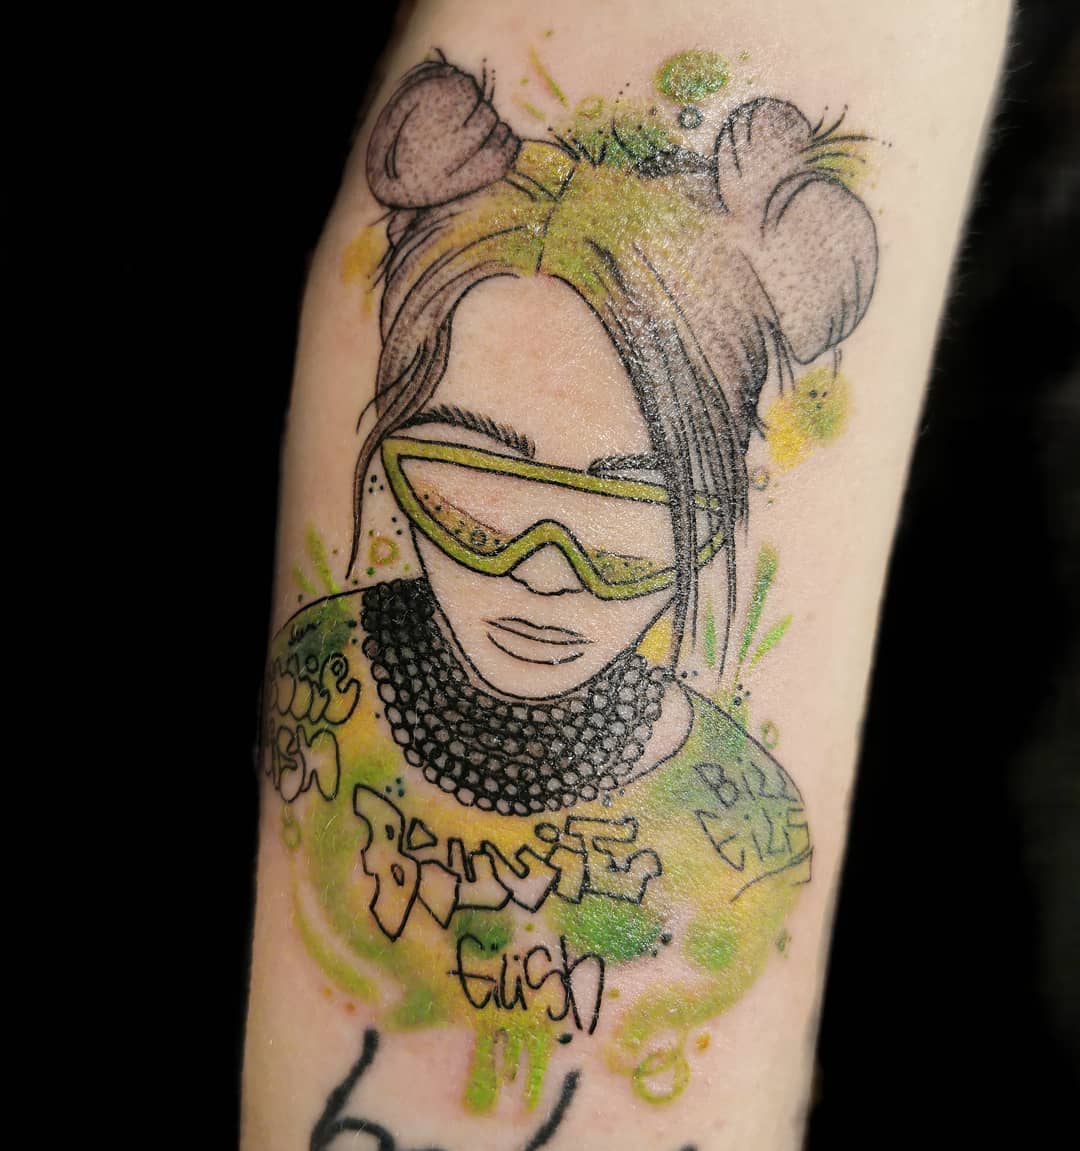 Billie Eilish portrait tattoo on Leg - Color style by Sayury